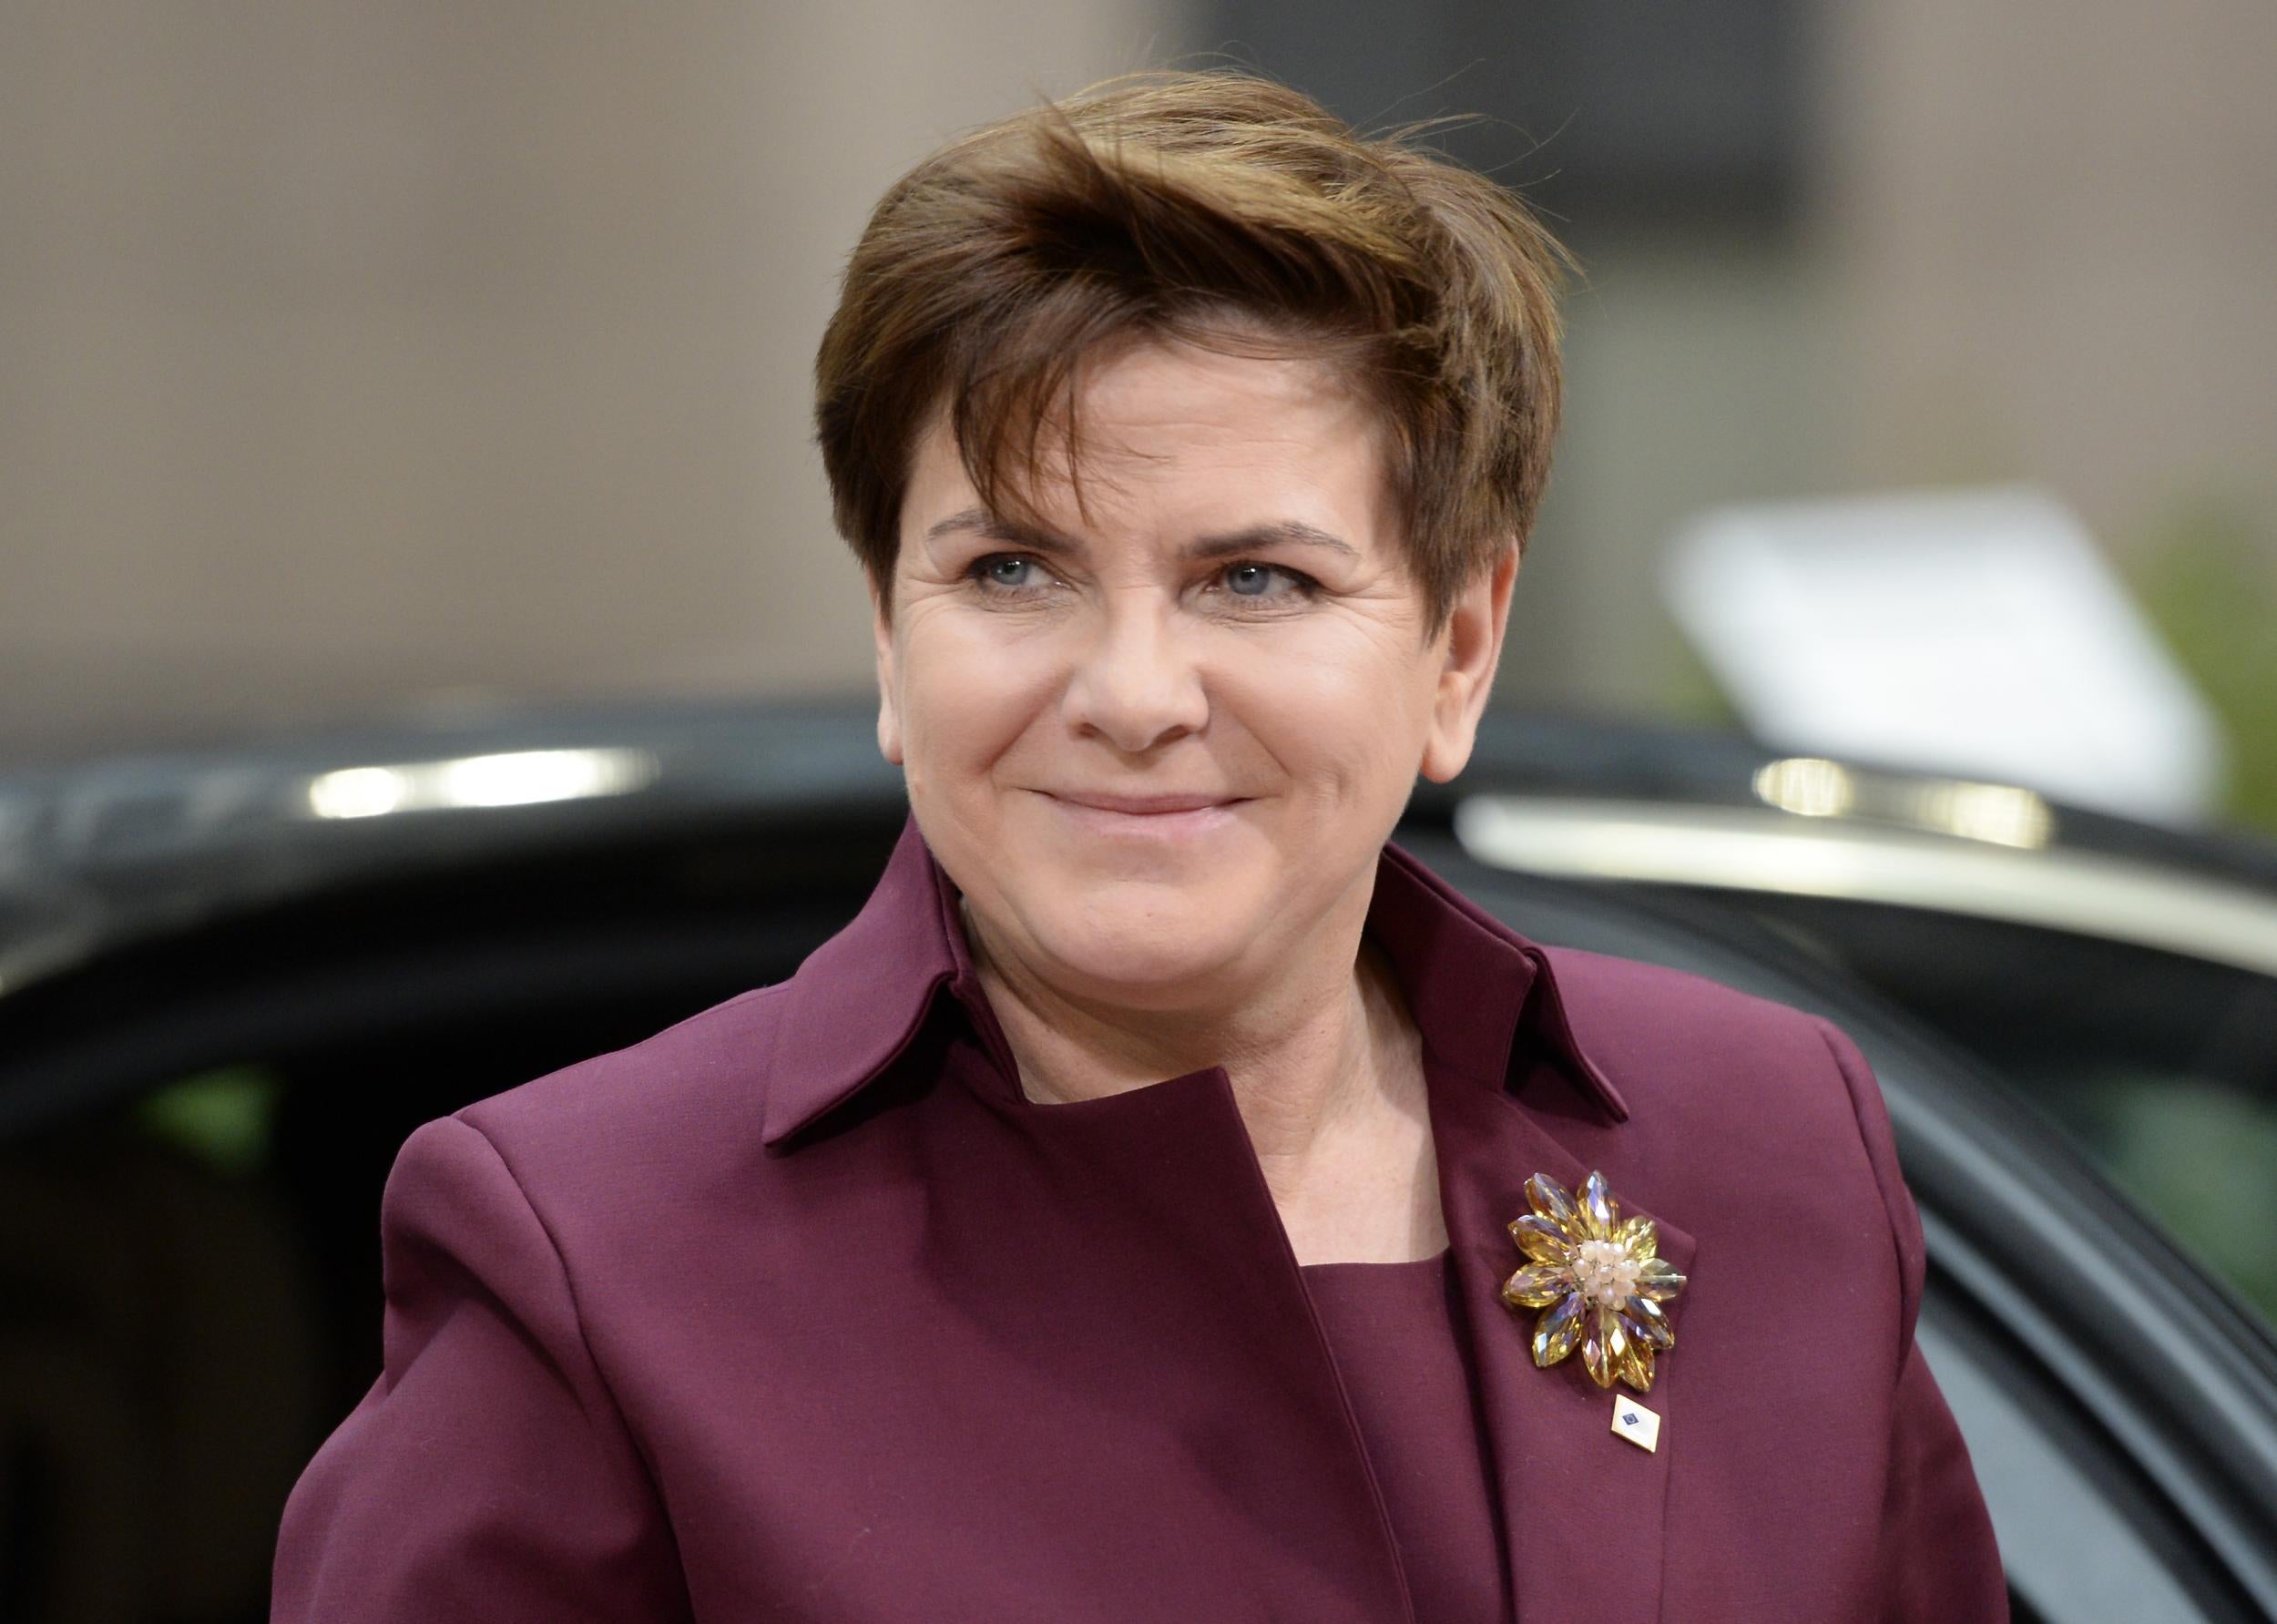 Poland's Prime Minister Beata Szydlo in November 2015